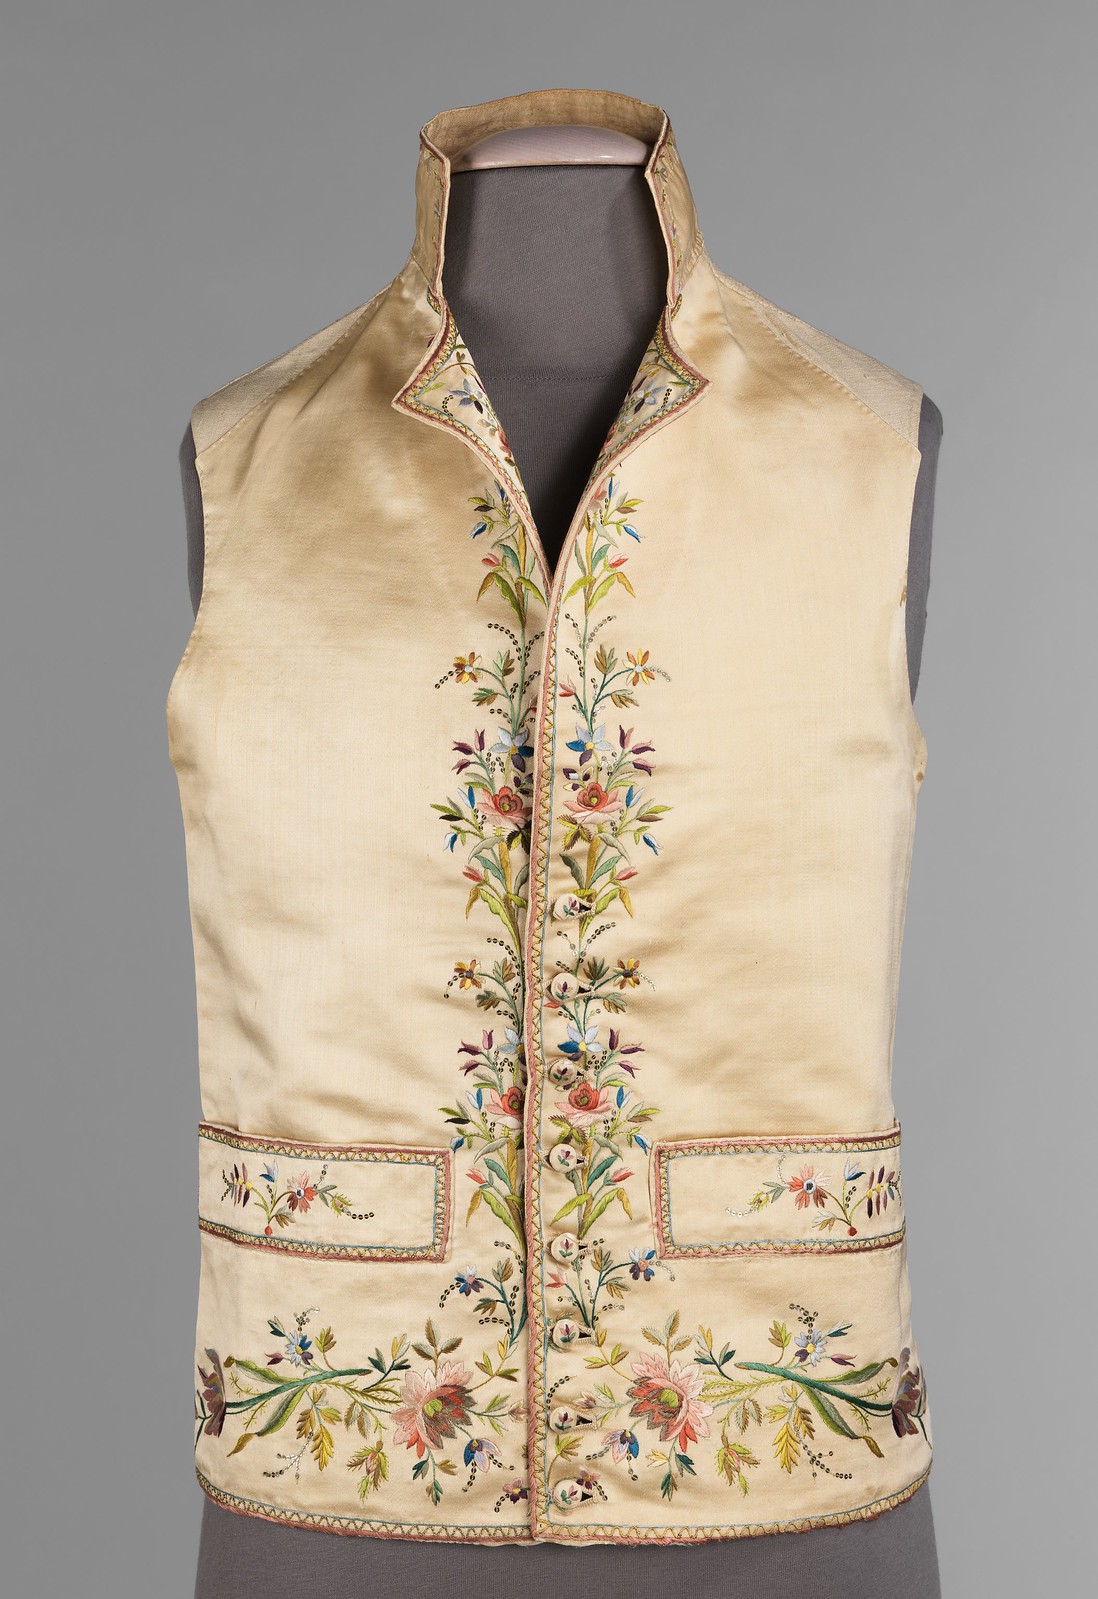 1800. French. silk, linen, metal, cotton. metmuseum